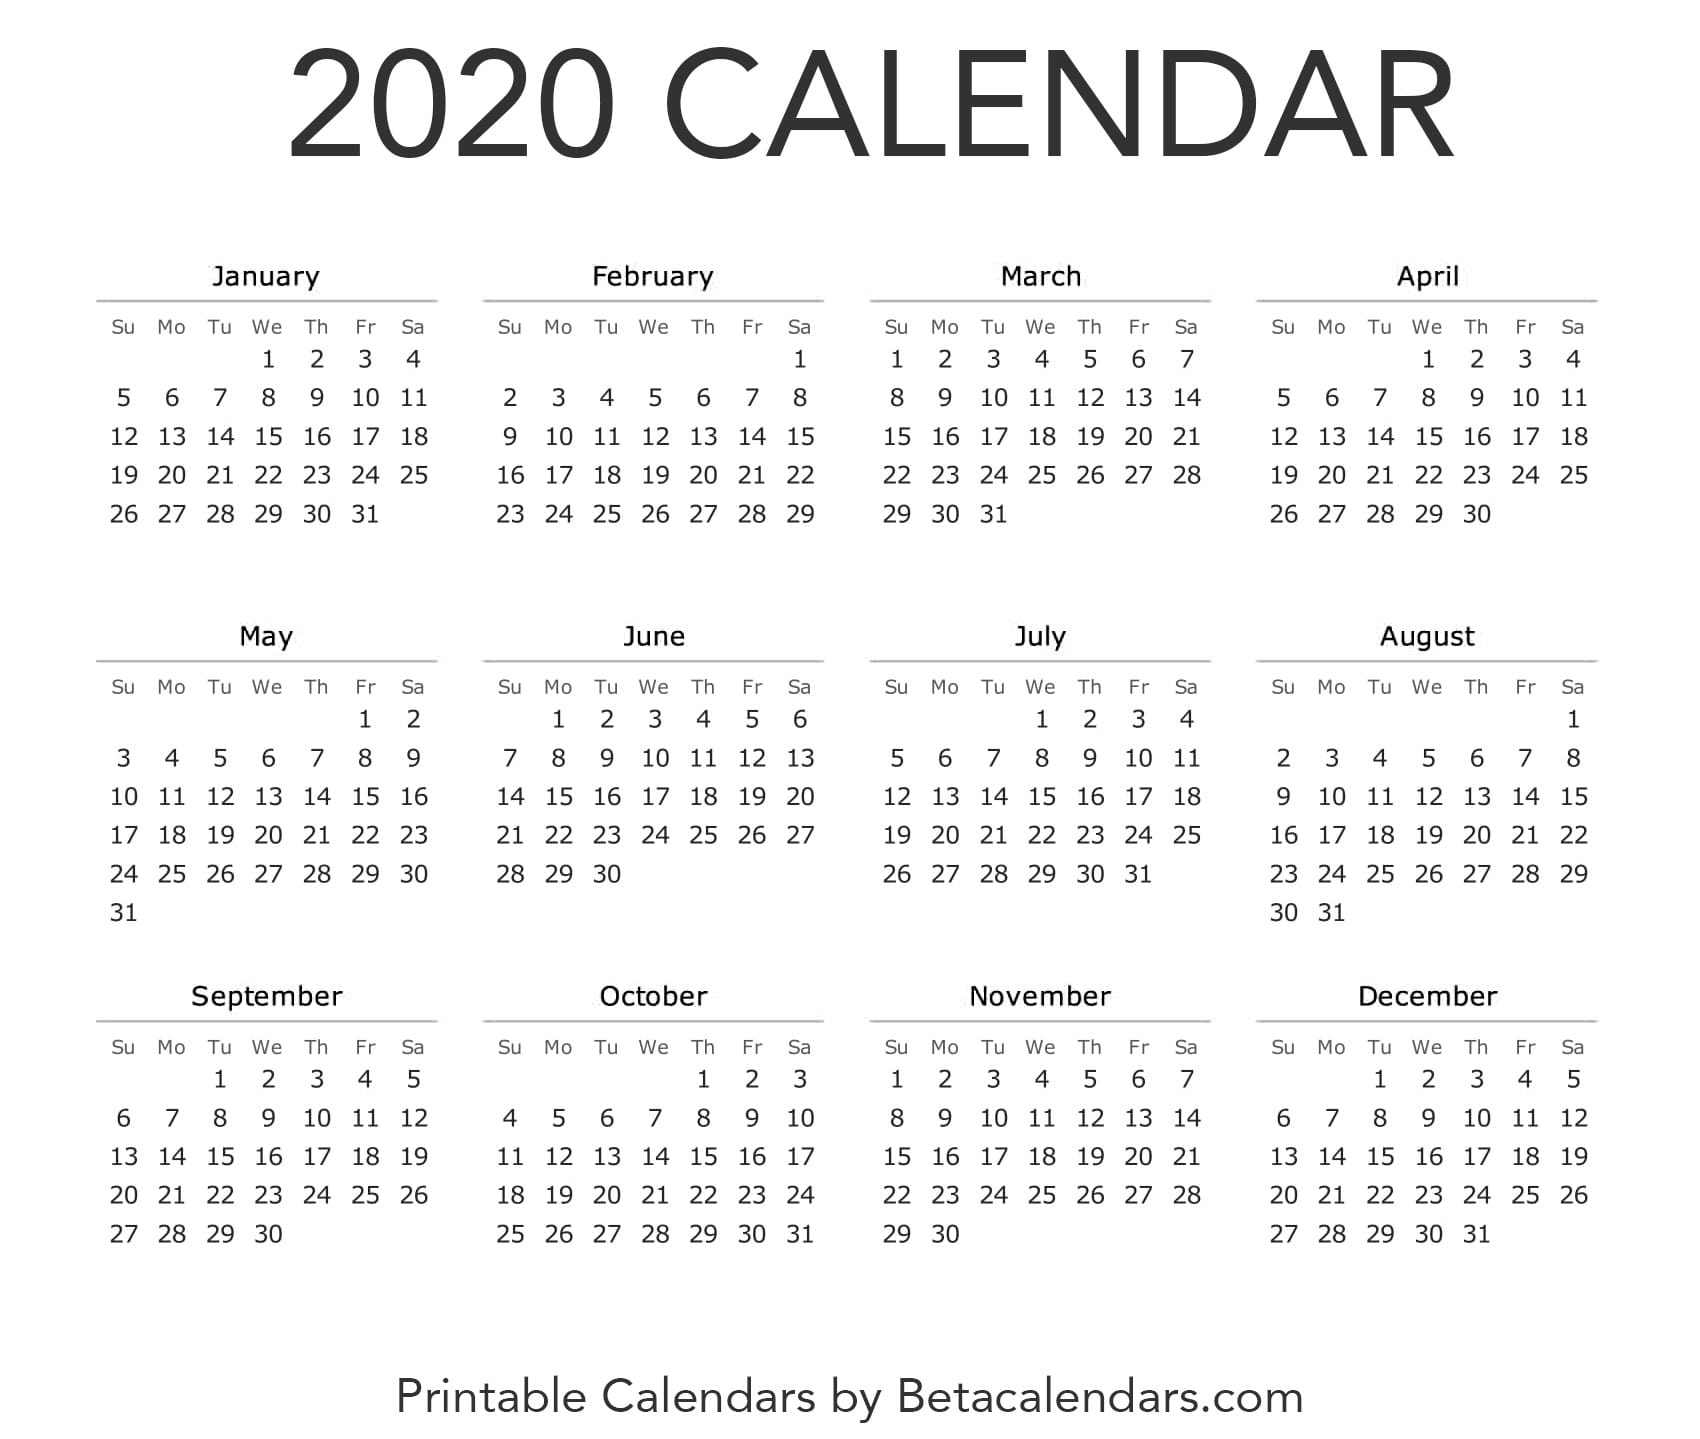 2020 Calendar  Beta Calendars with regard to Printable Calendars By Beta Calendars